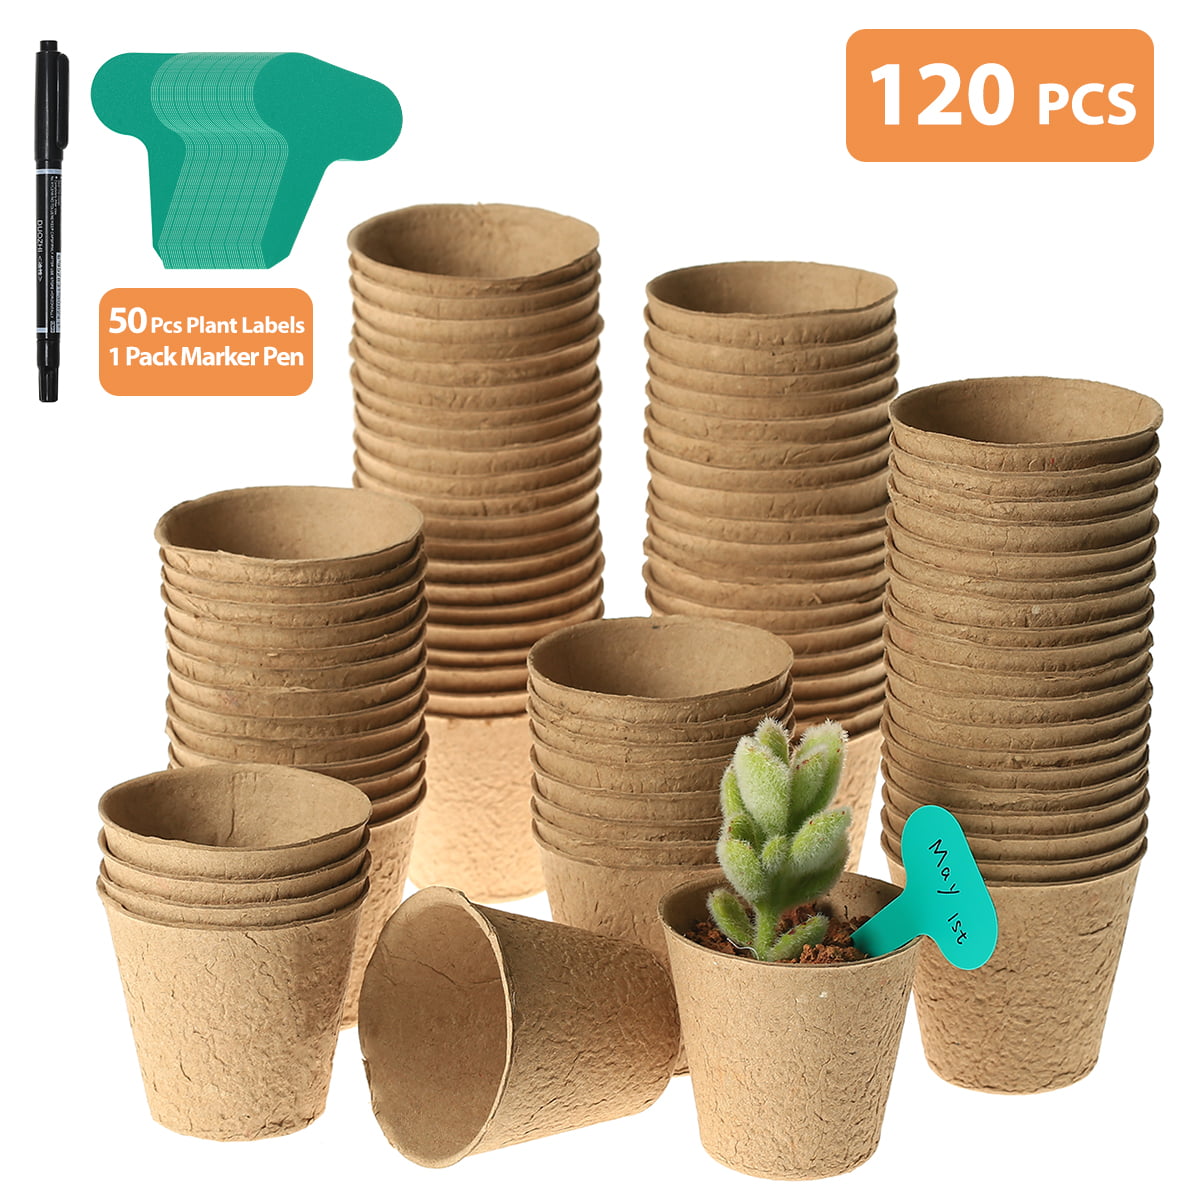 Seed Starter Kit 120 Pcs Peat Pots 3 Inch Biodegradable Pots for Seedlings